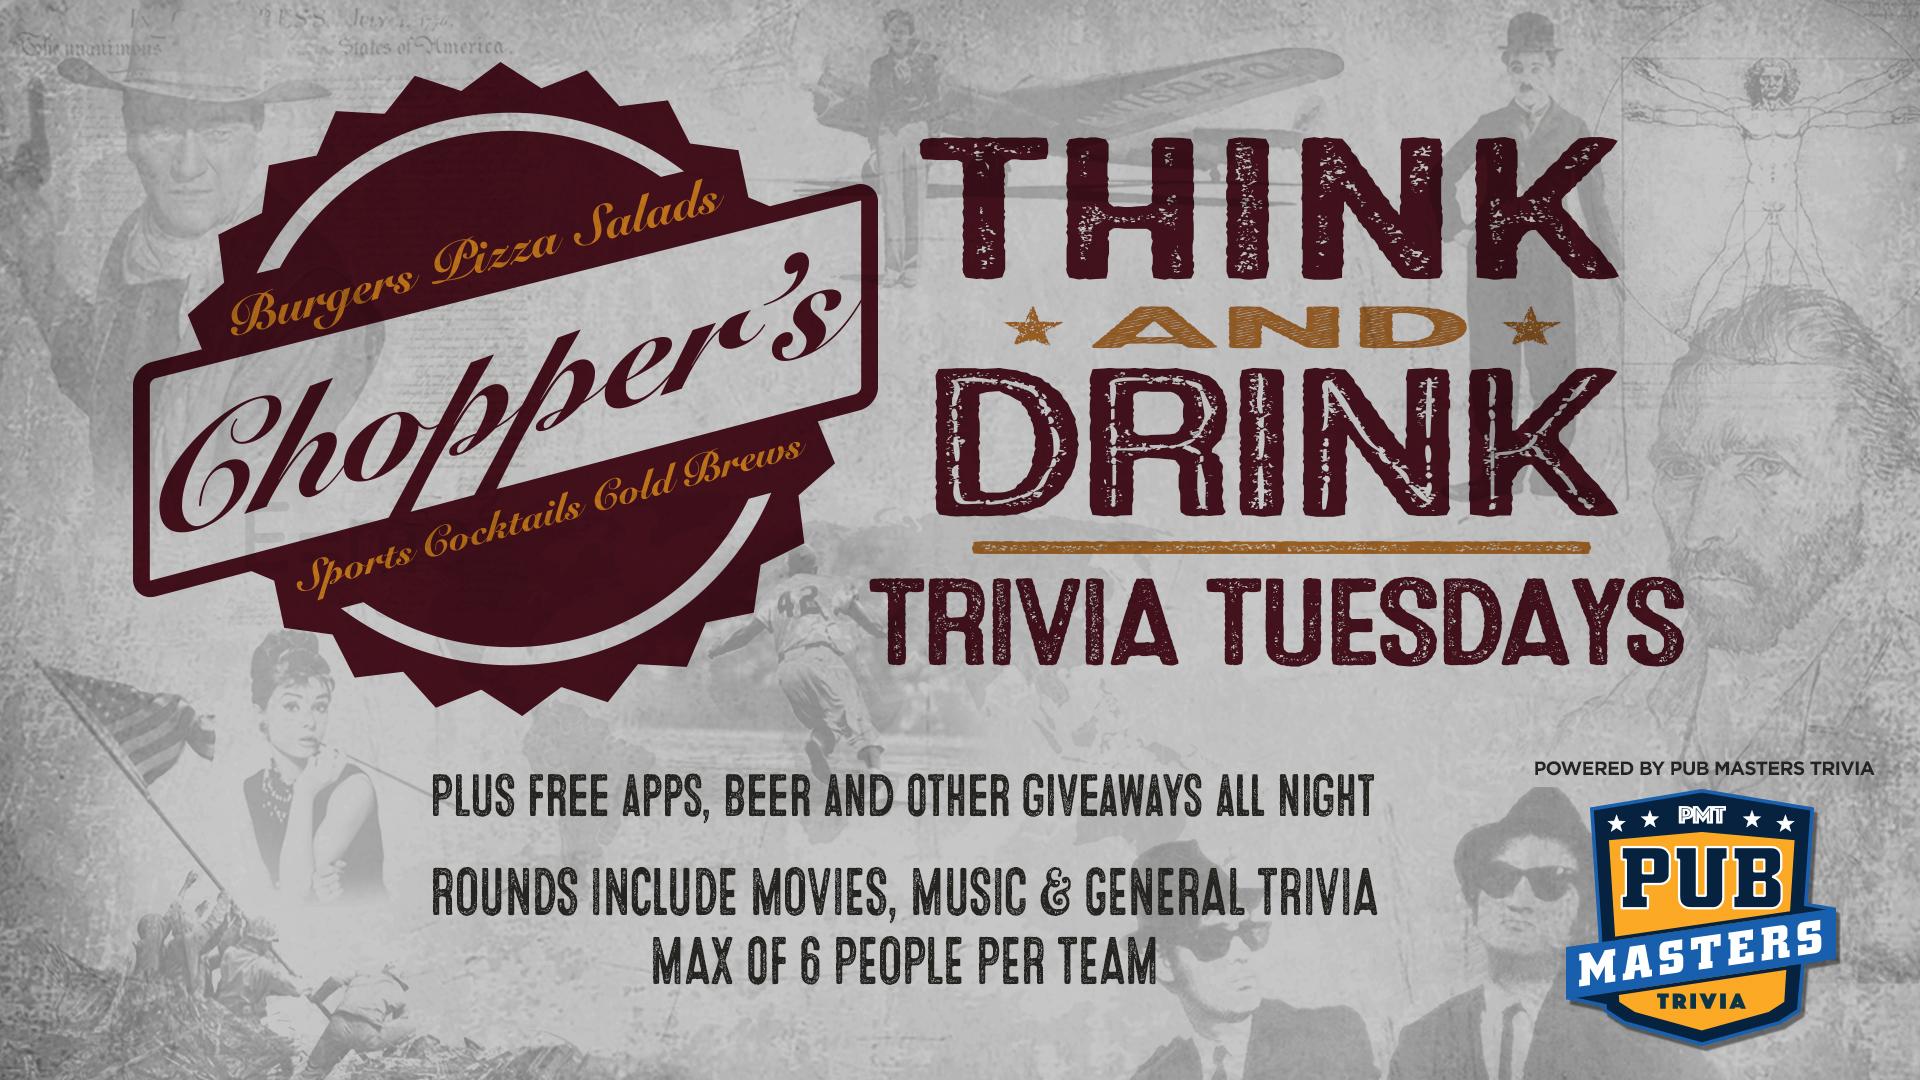 Pub Masters Trivia LIVE at Chopper's Sports Grill - Denver!